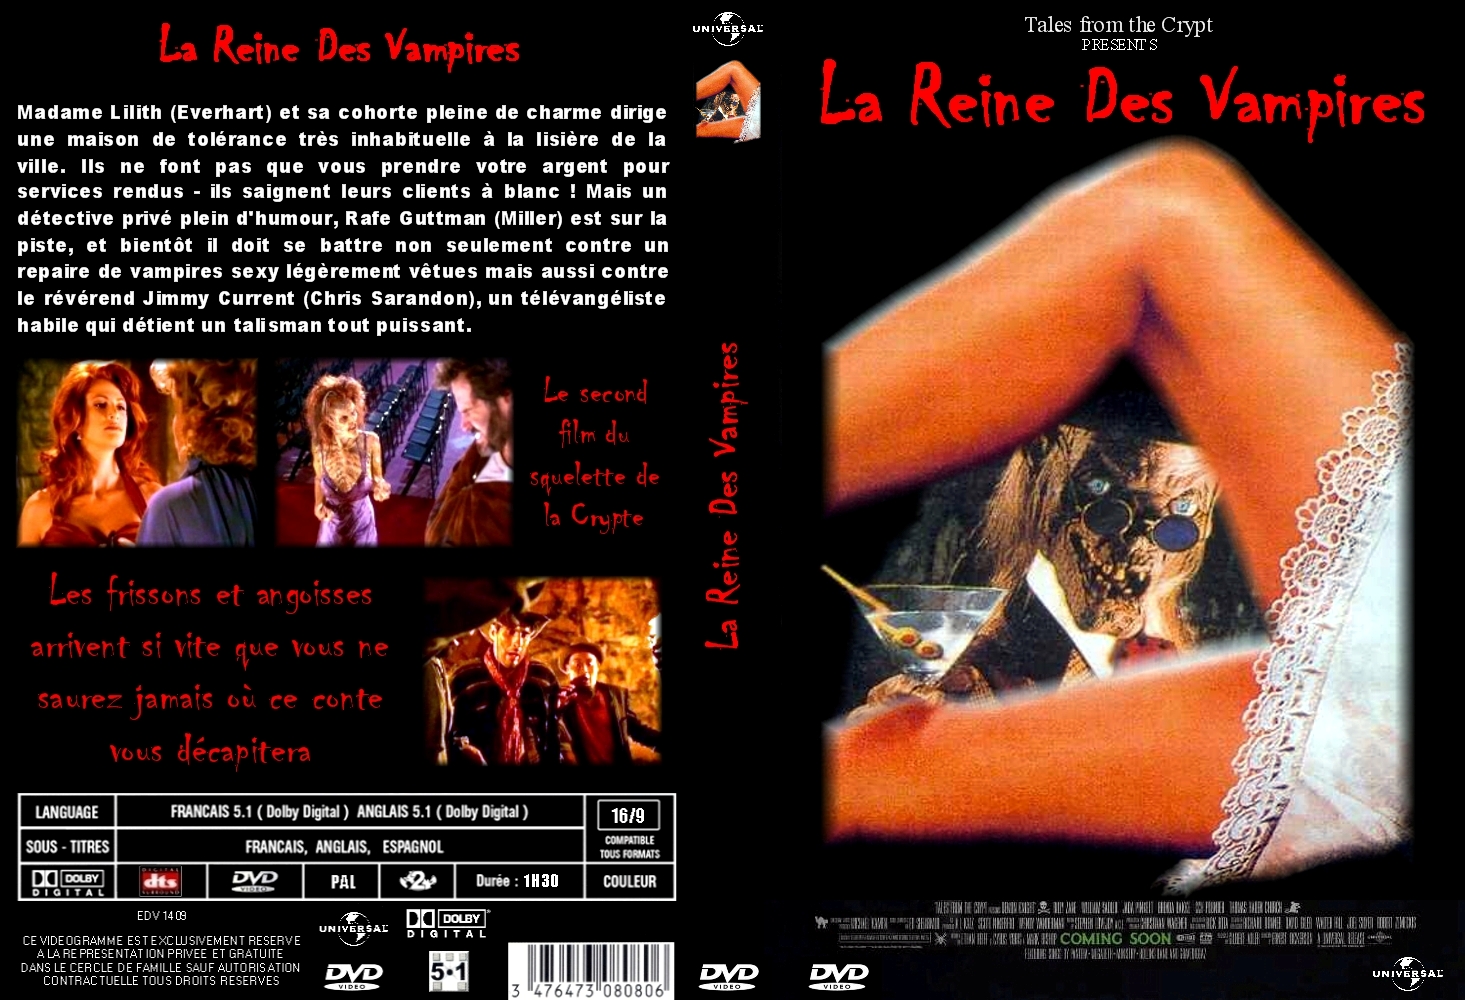 Jaquette DVD La reine des vampires (les contes de la crypte film 2) custom